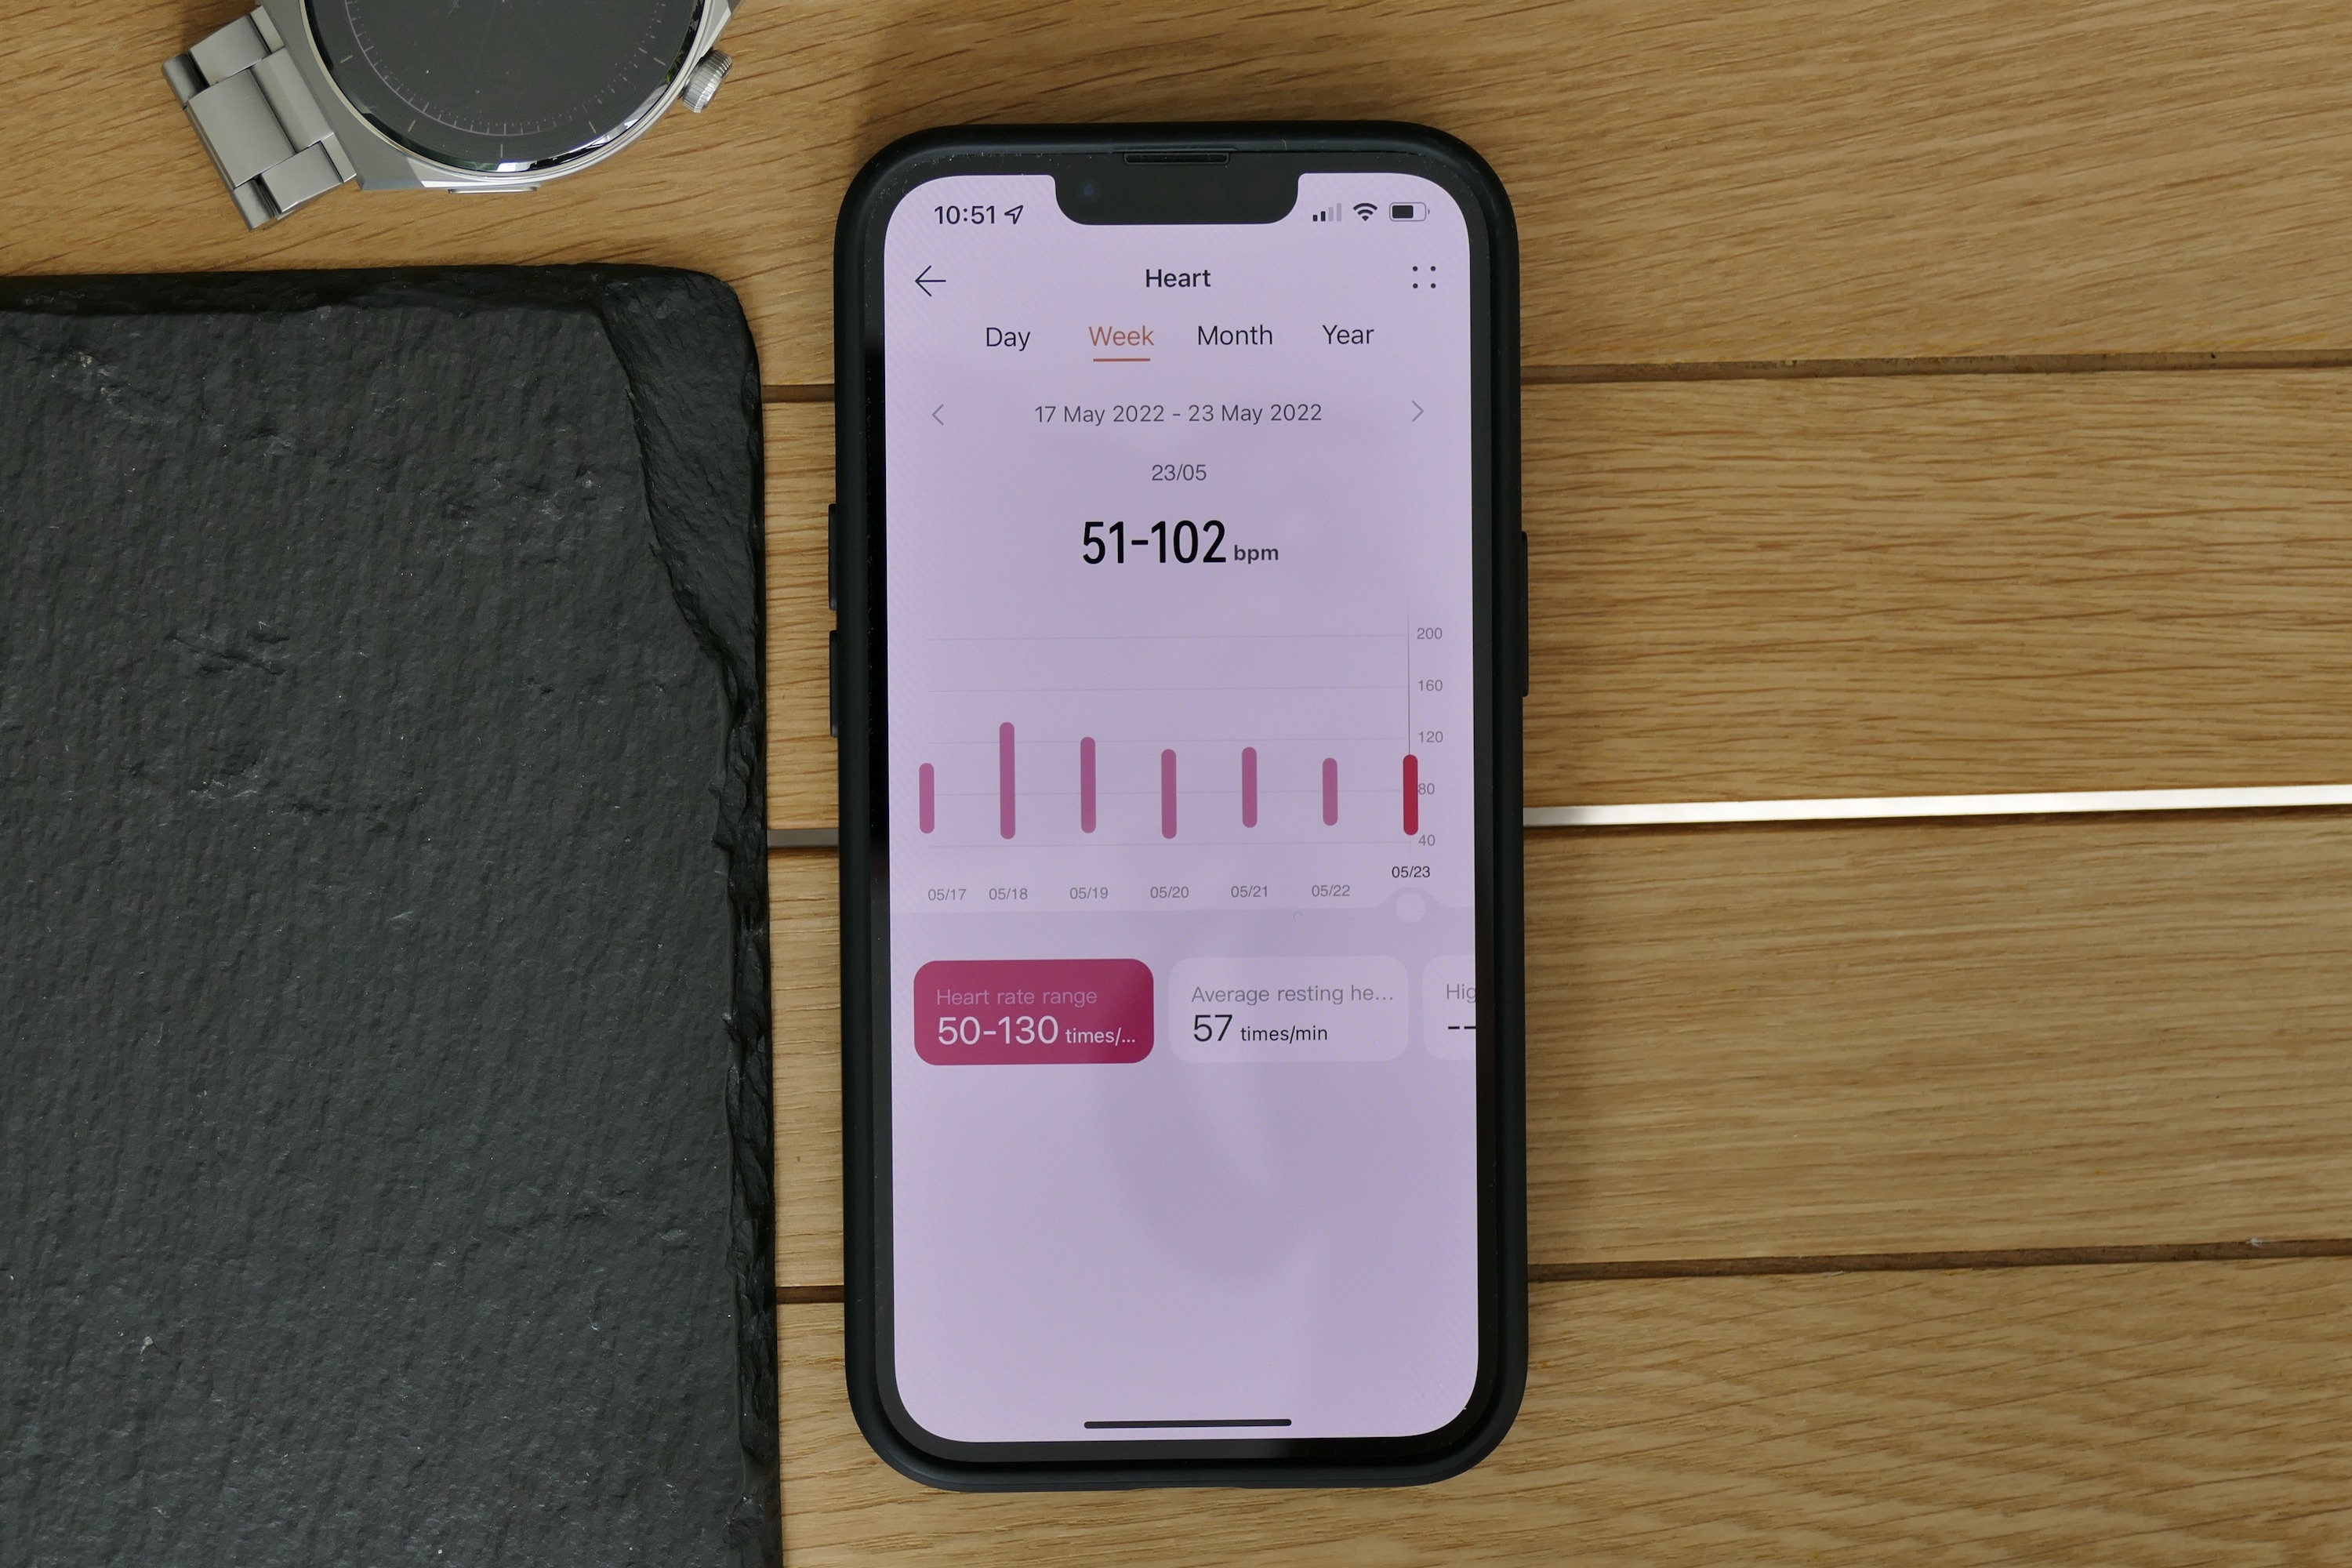 Huawei Health app showing heart rate data.